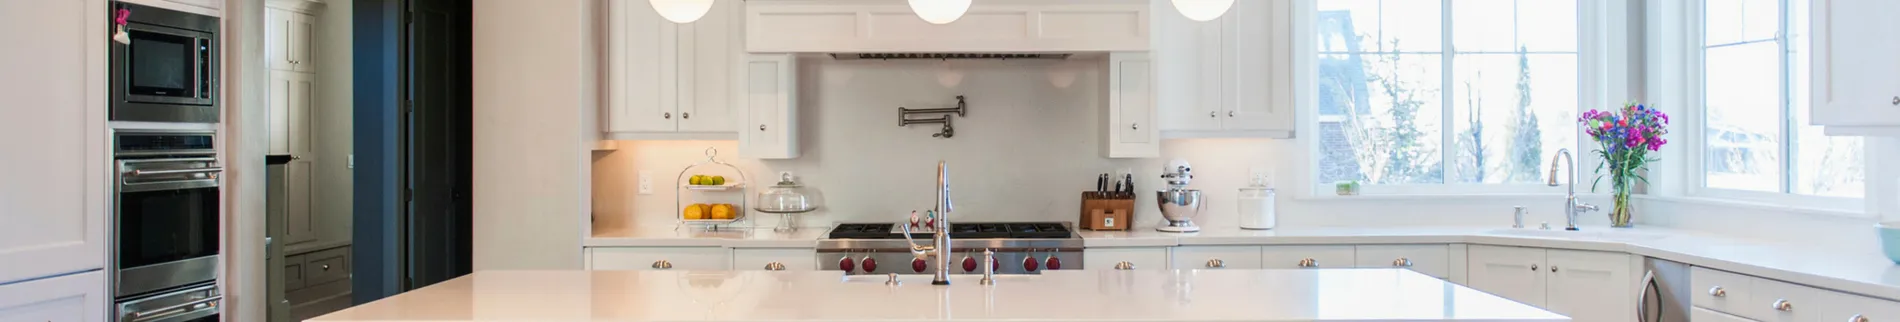 countertop in white kitchen